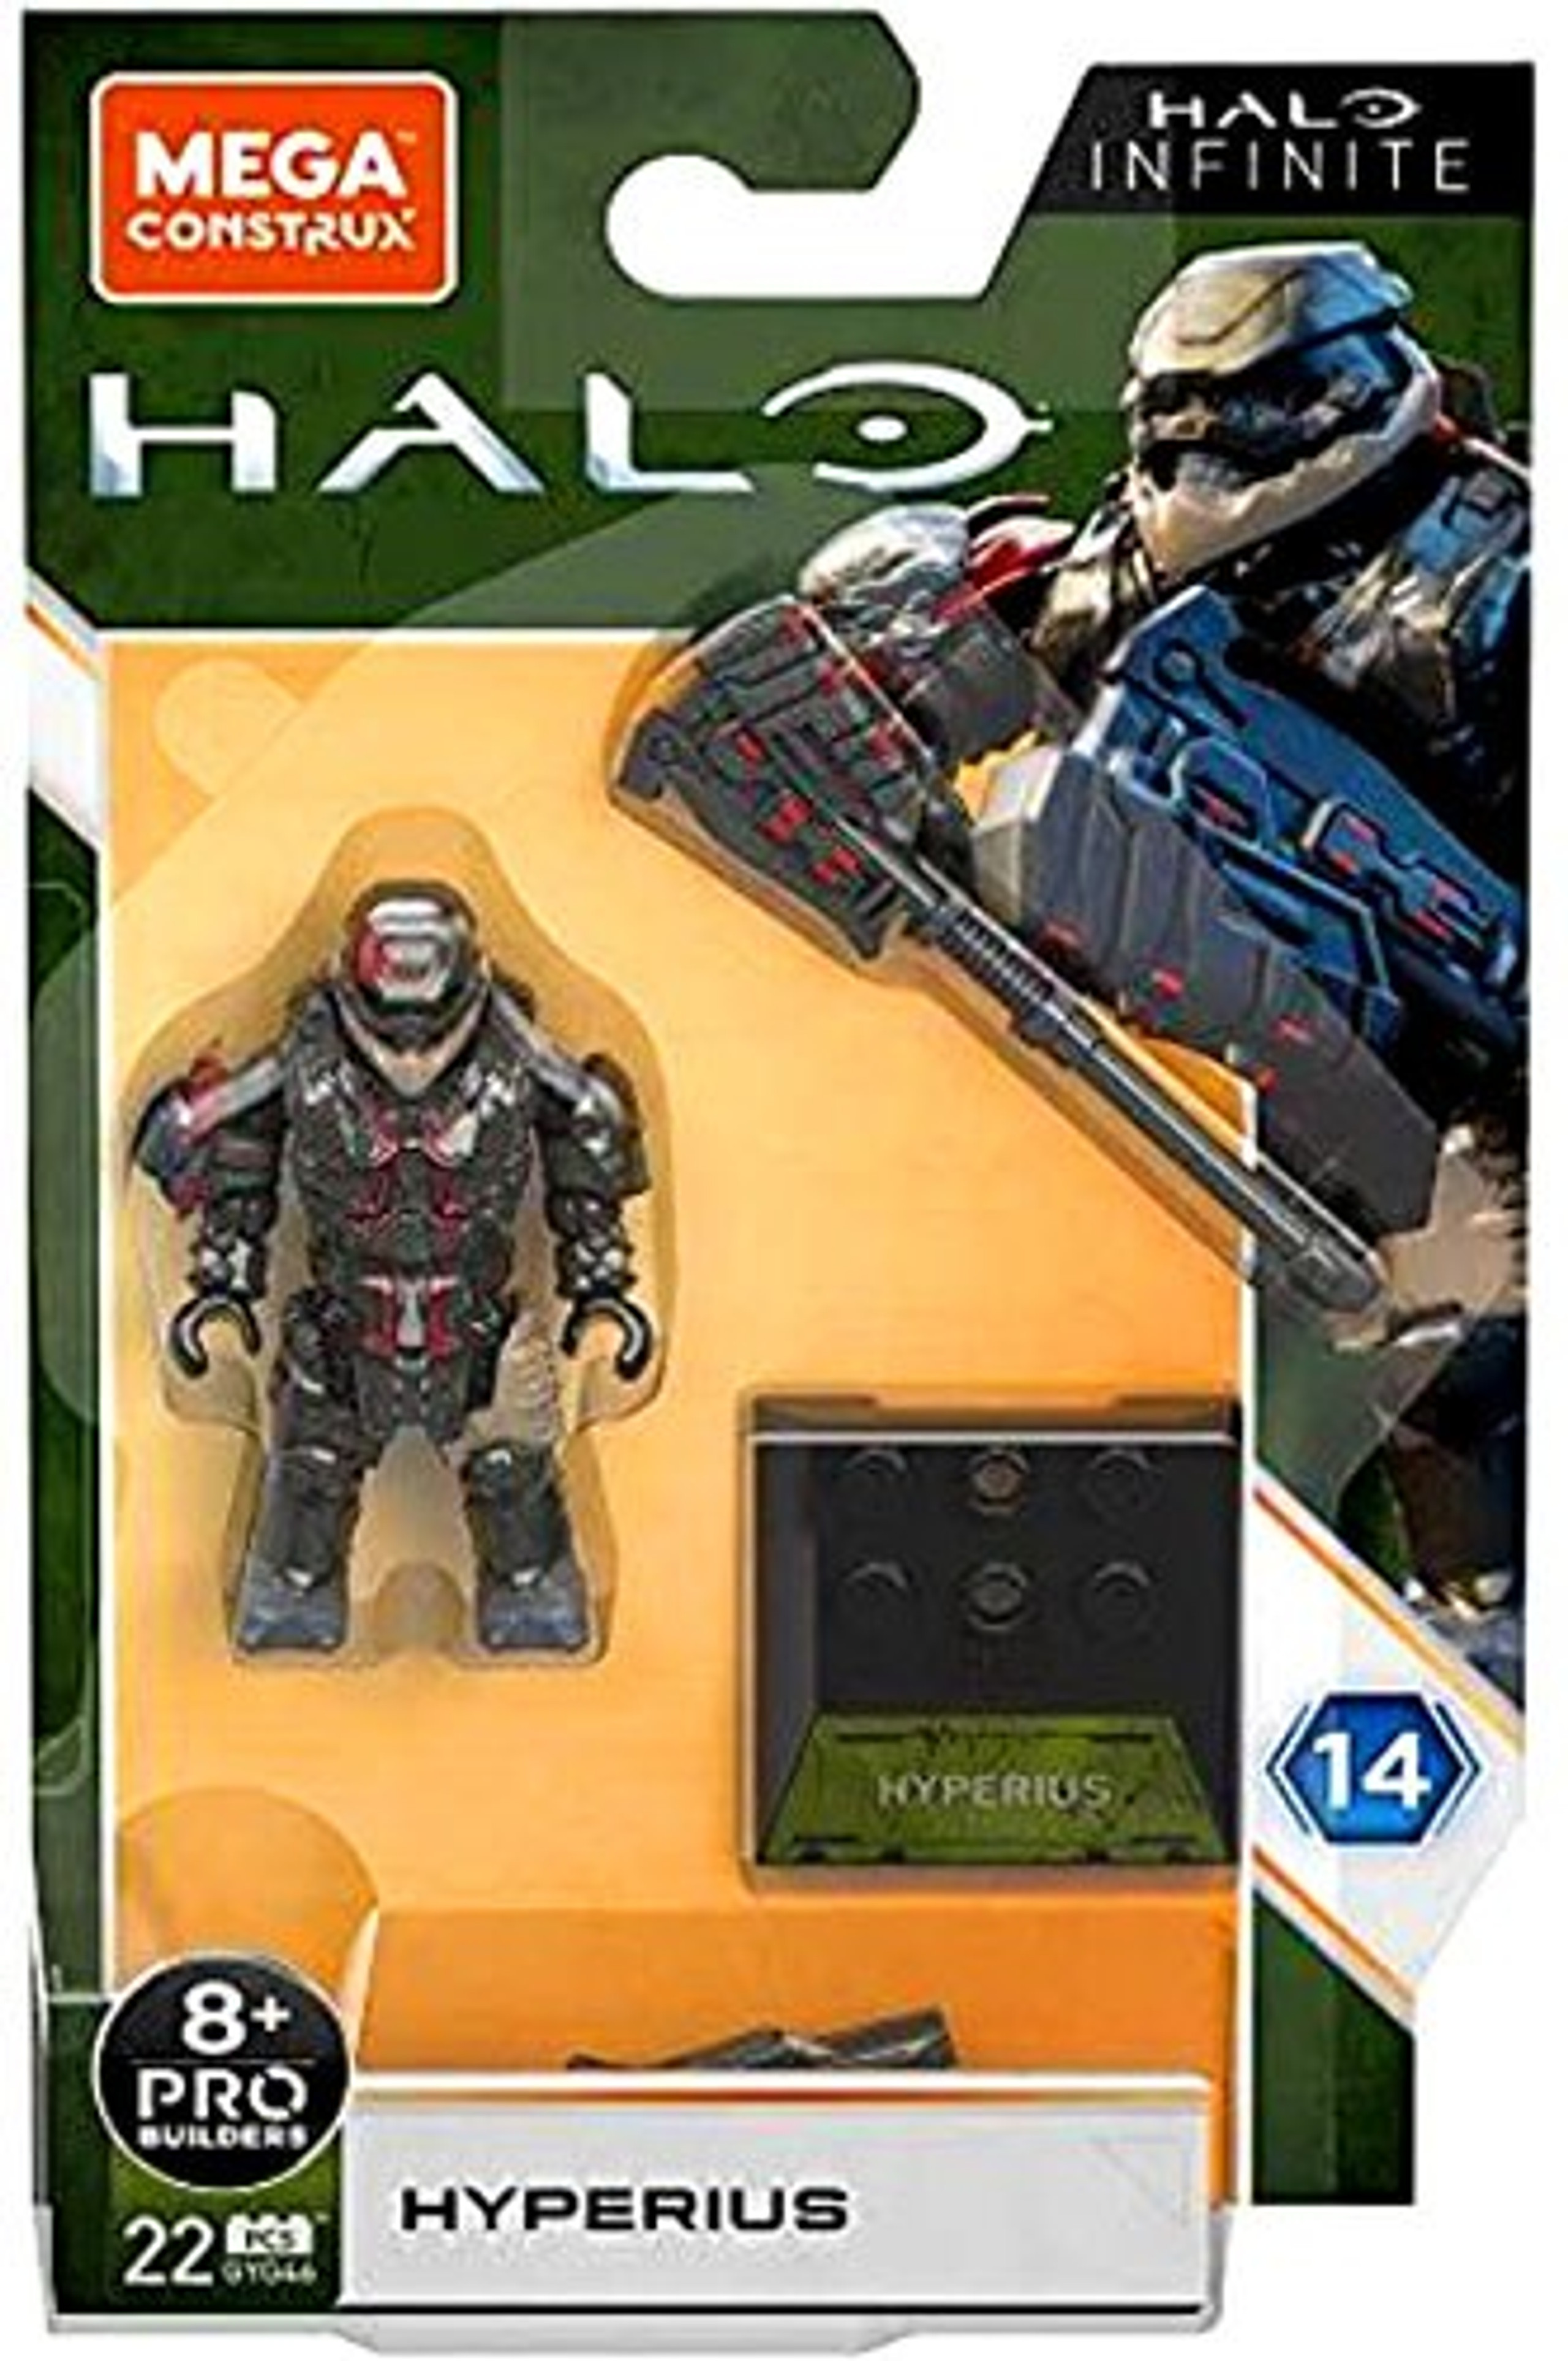 Halo Infinite Heroes Series 14 Hyperius Mini Figure Mega Construx - ToyWiz